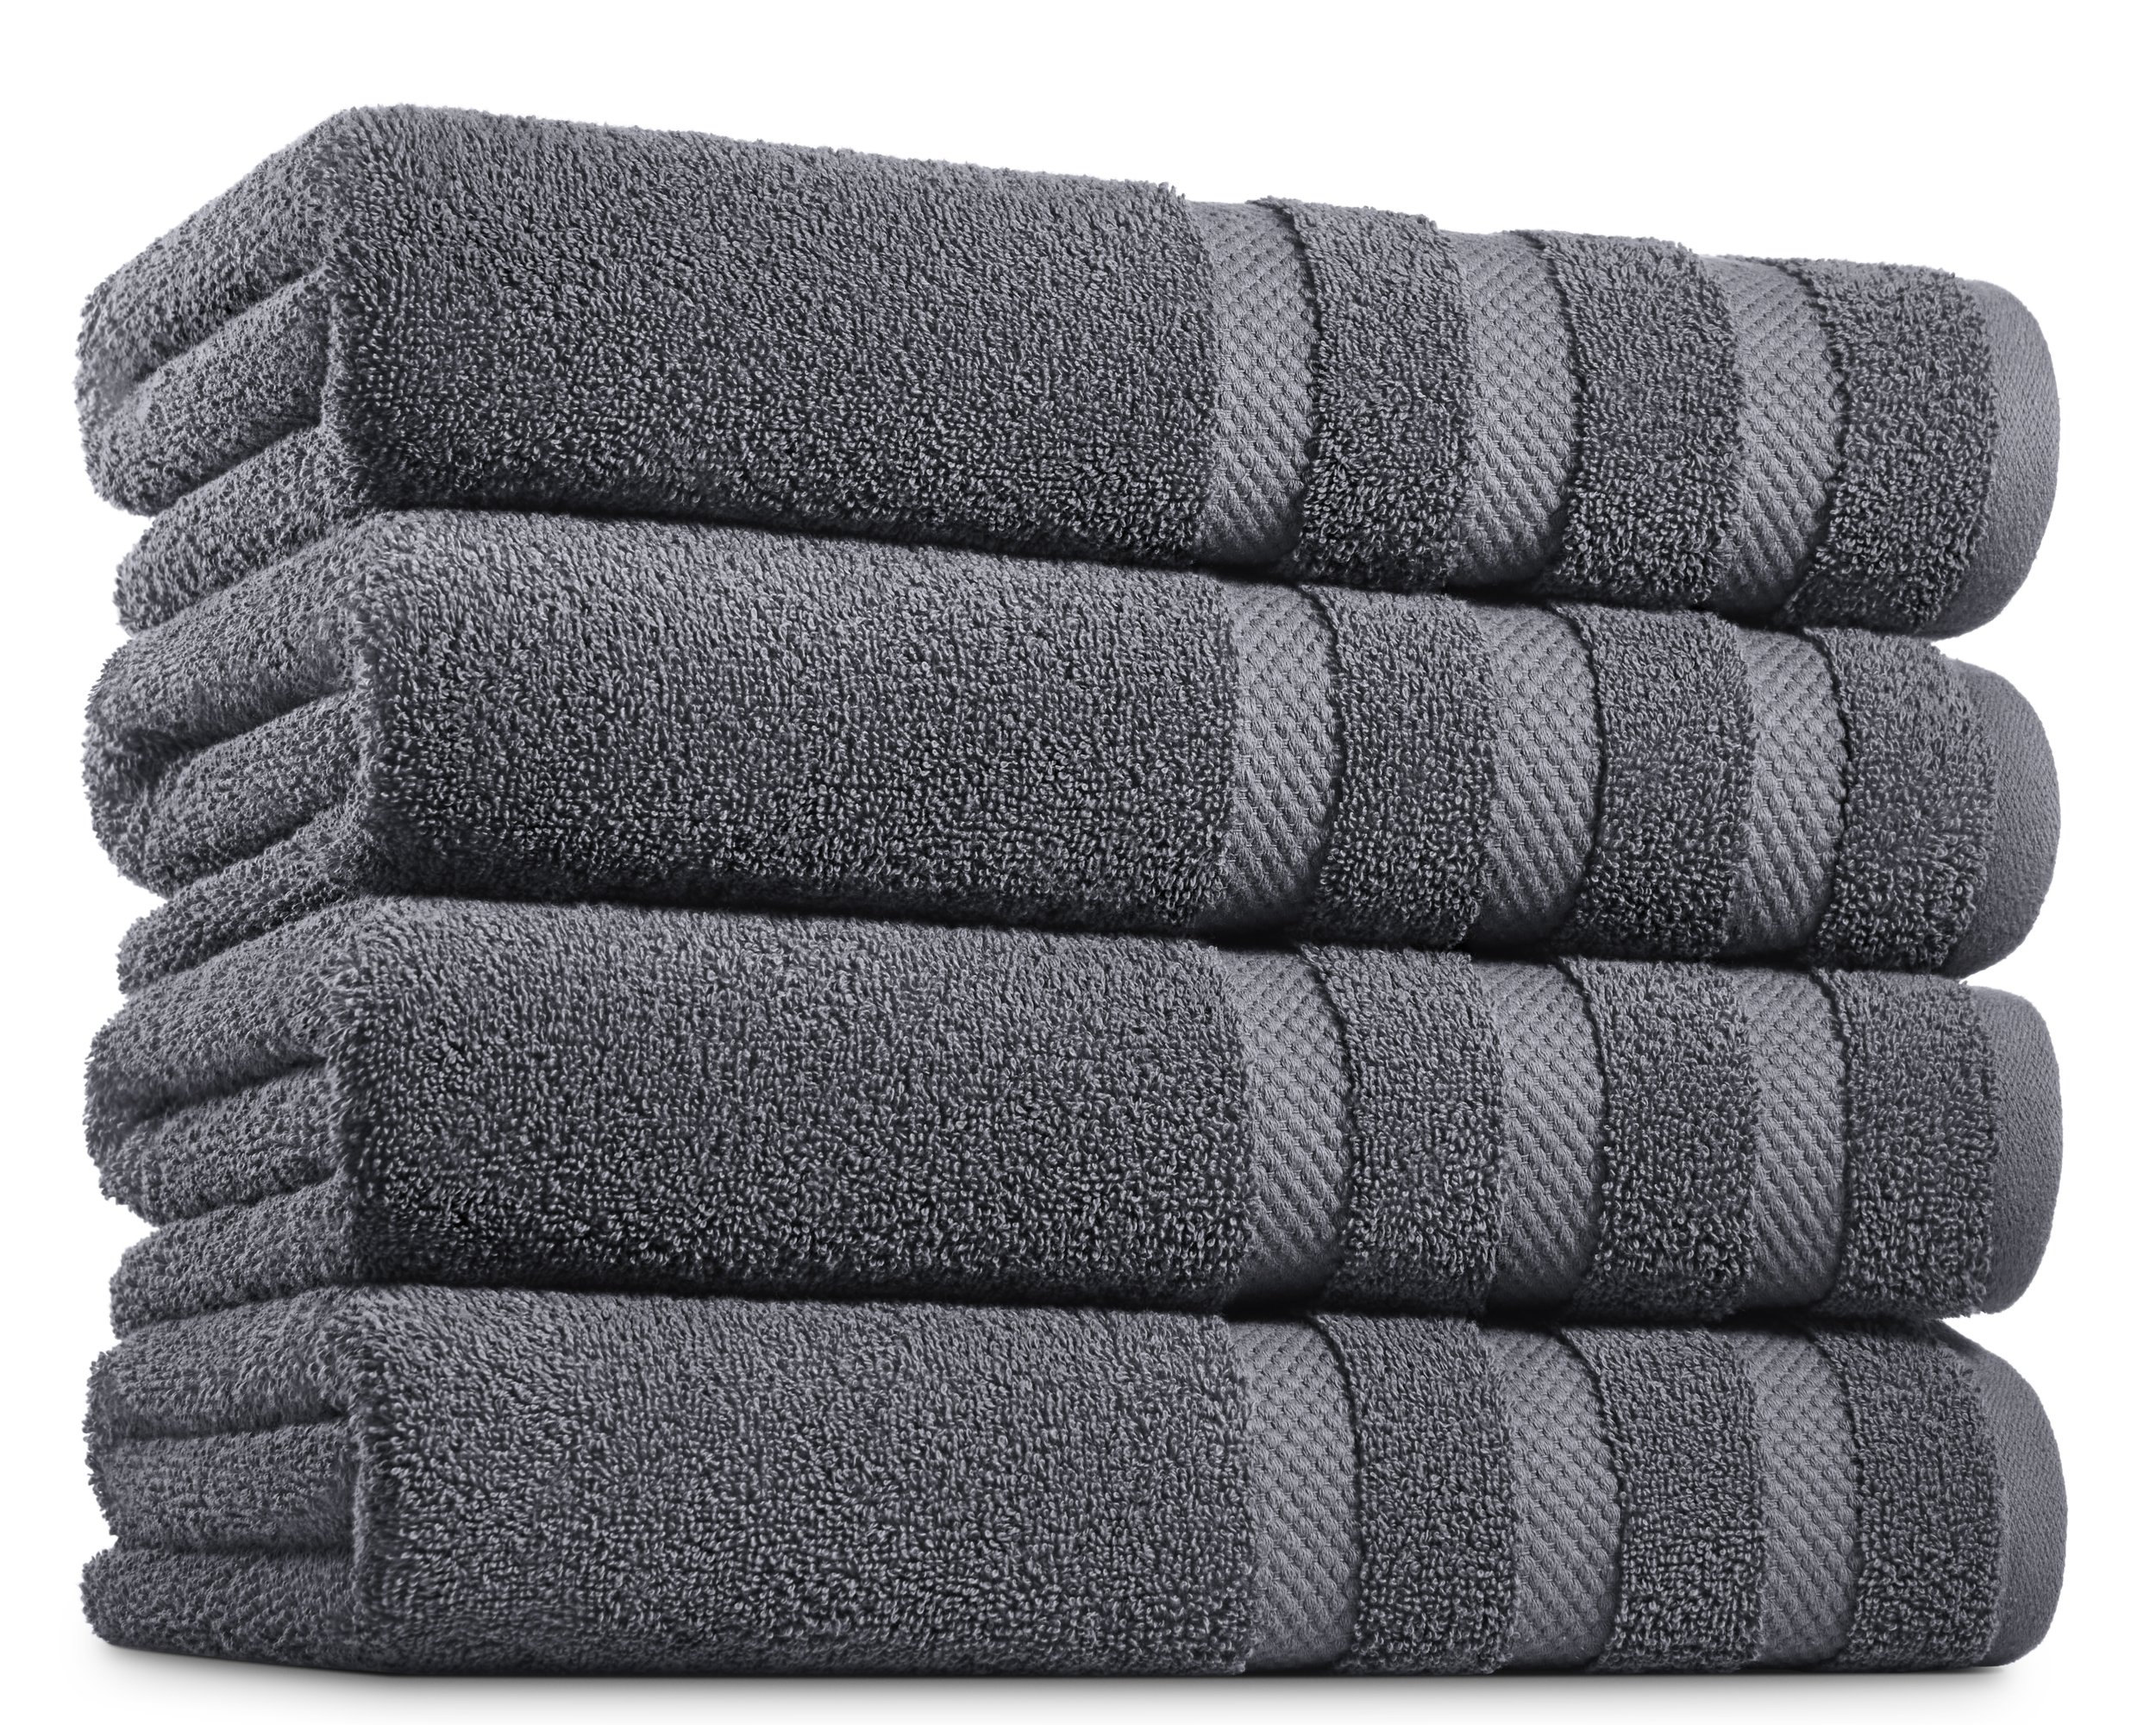 4 bath towels + 2 gray.jpg